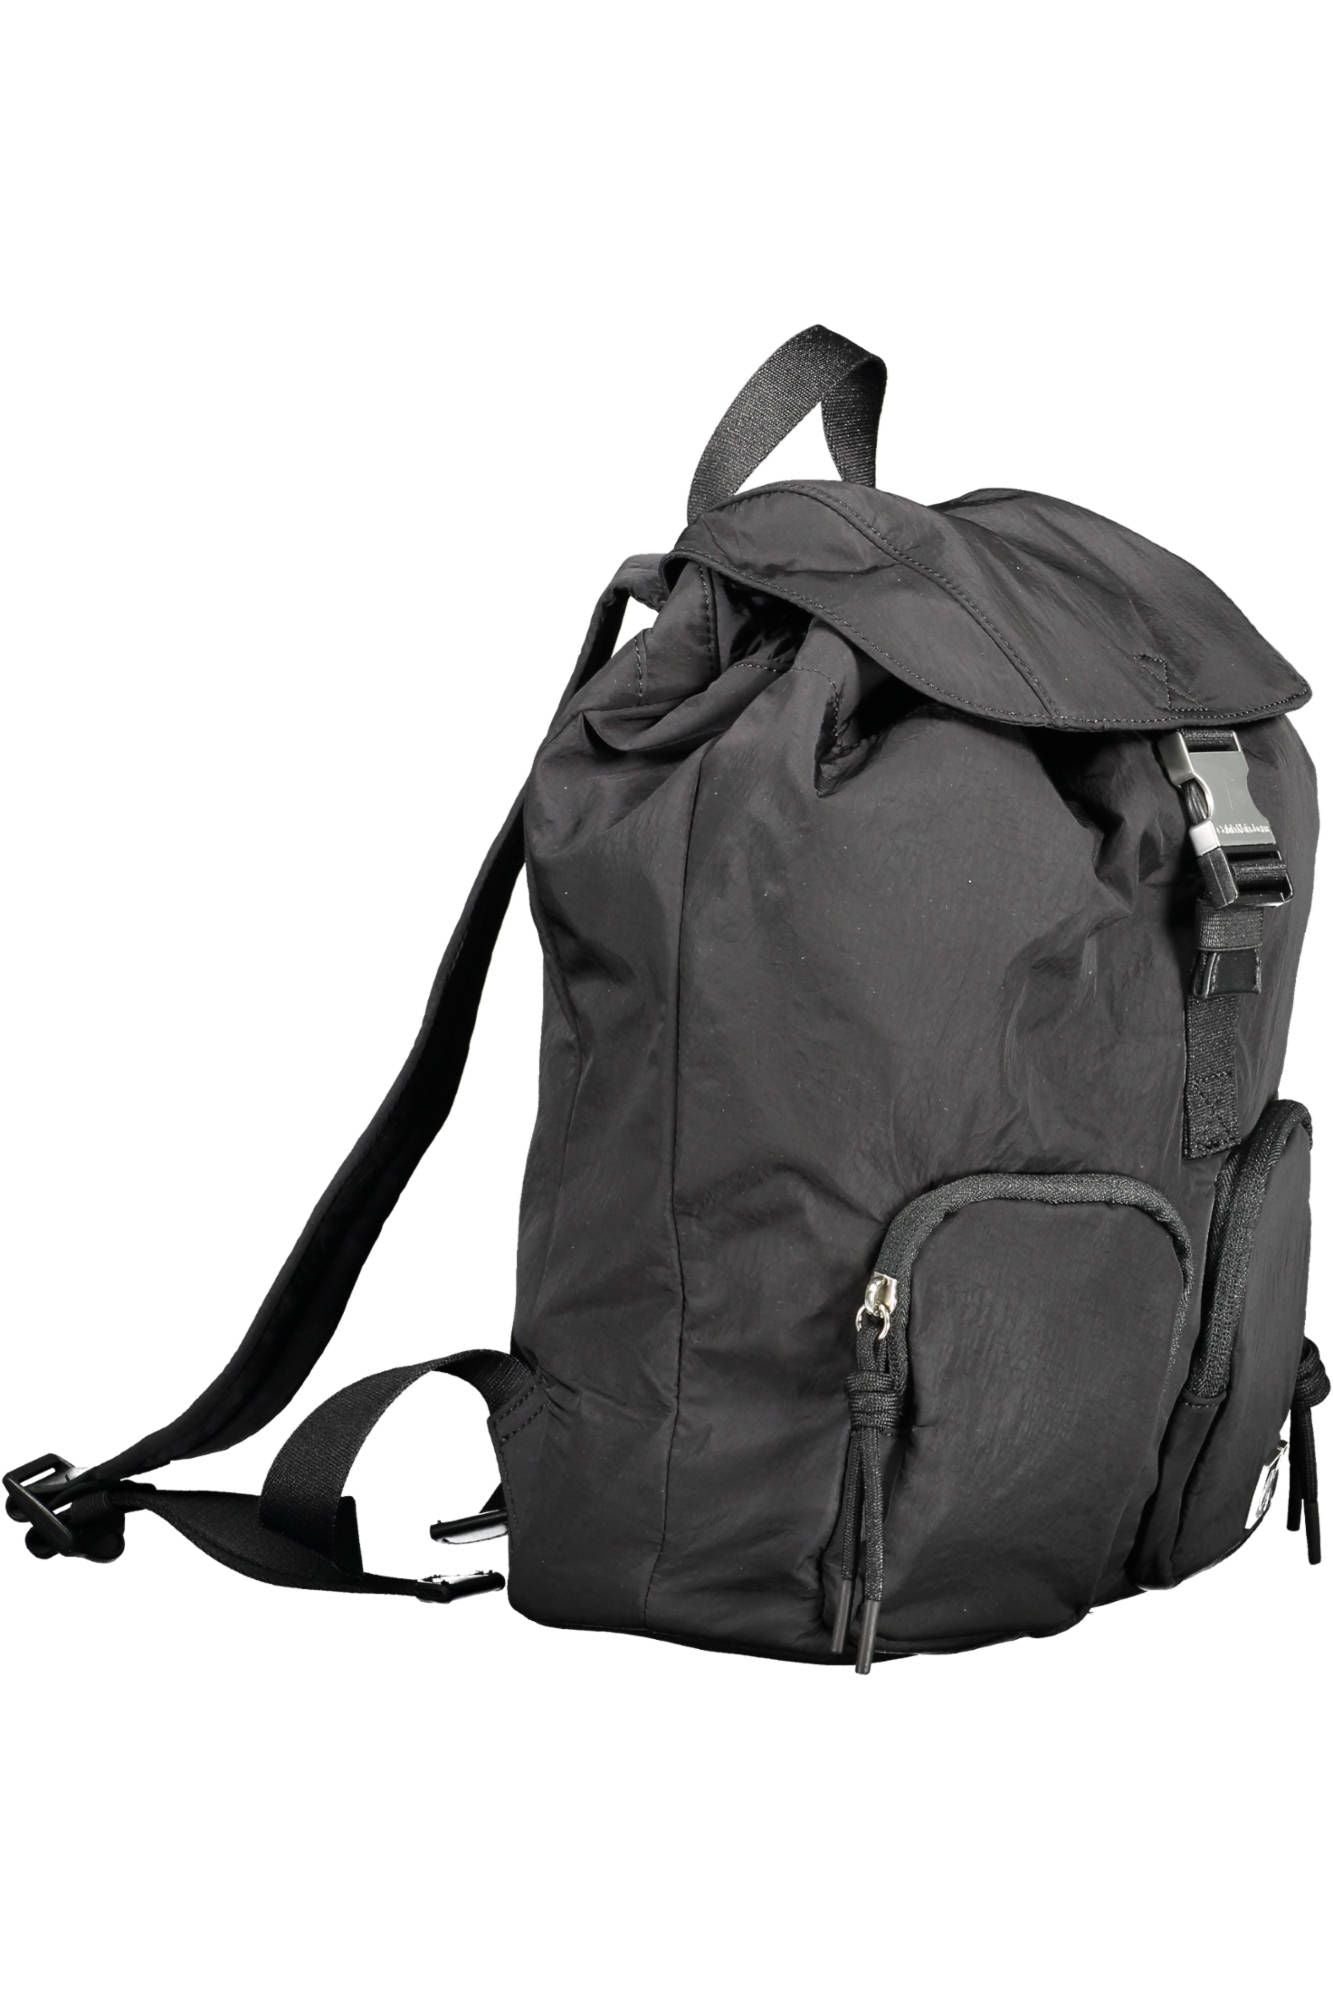 Sleek Urban Backpack with Contrasting Details